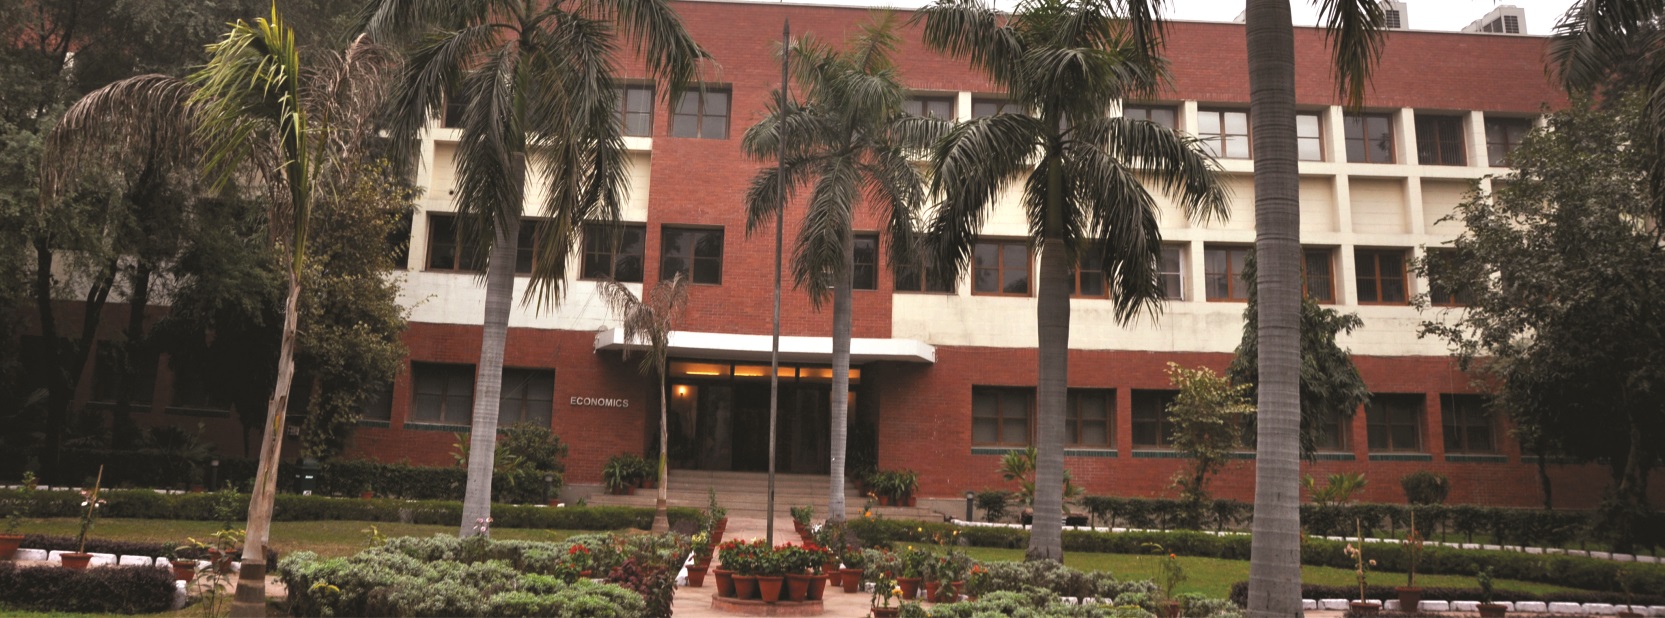 delhi school of economics phd admission 2022